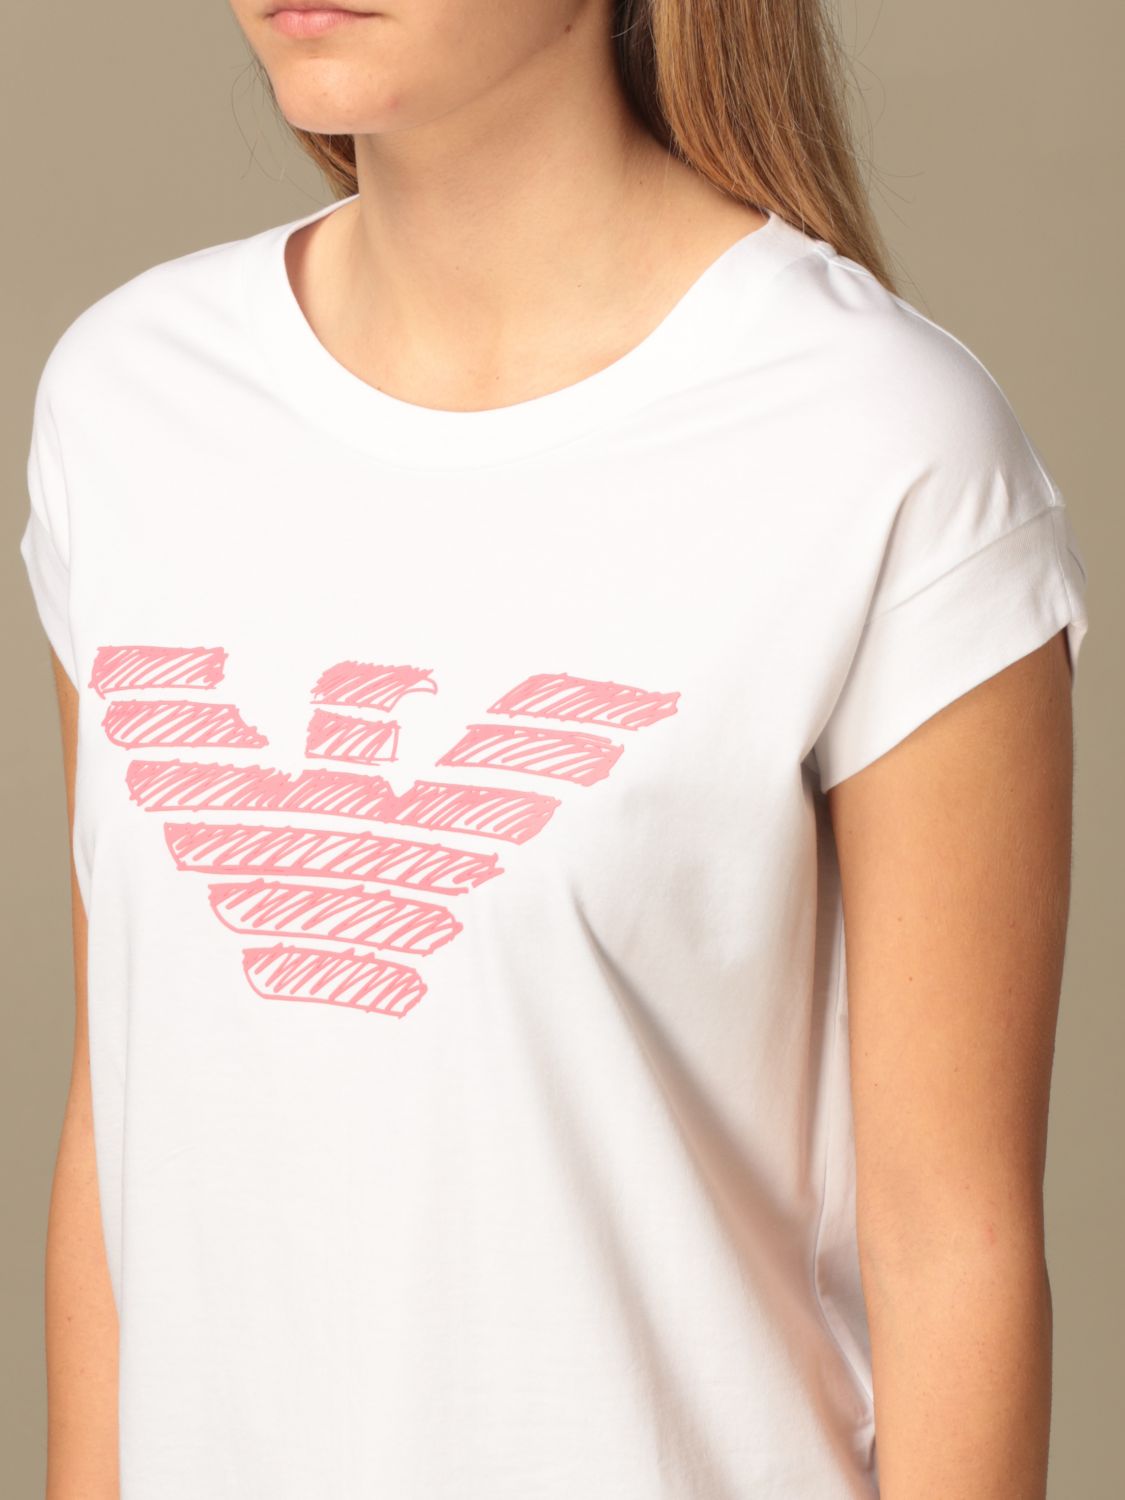 Emporio Armani Outlet: Camiseta mujer | Camiseta Emporio Armani Mujer